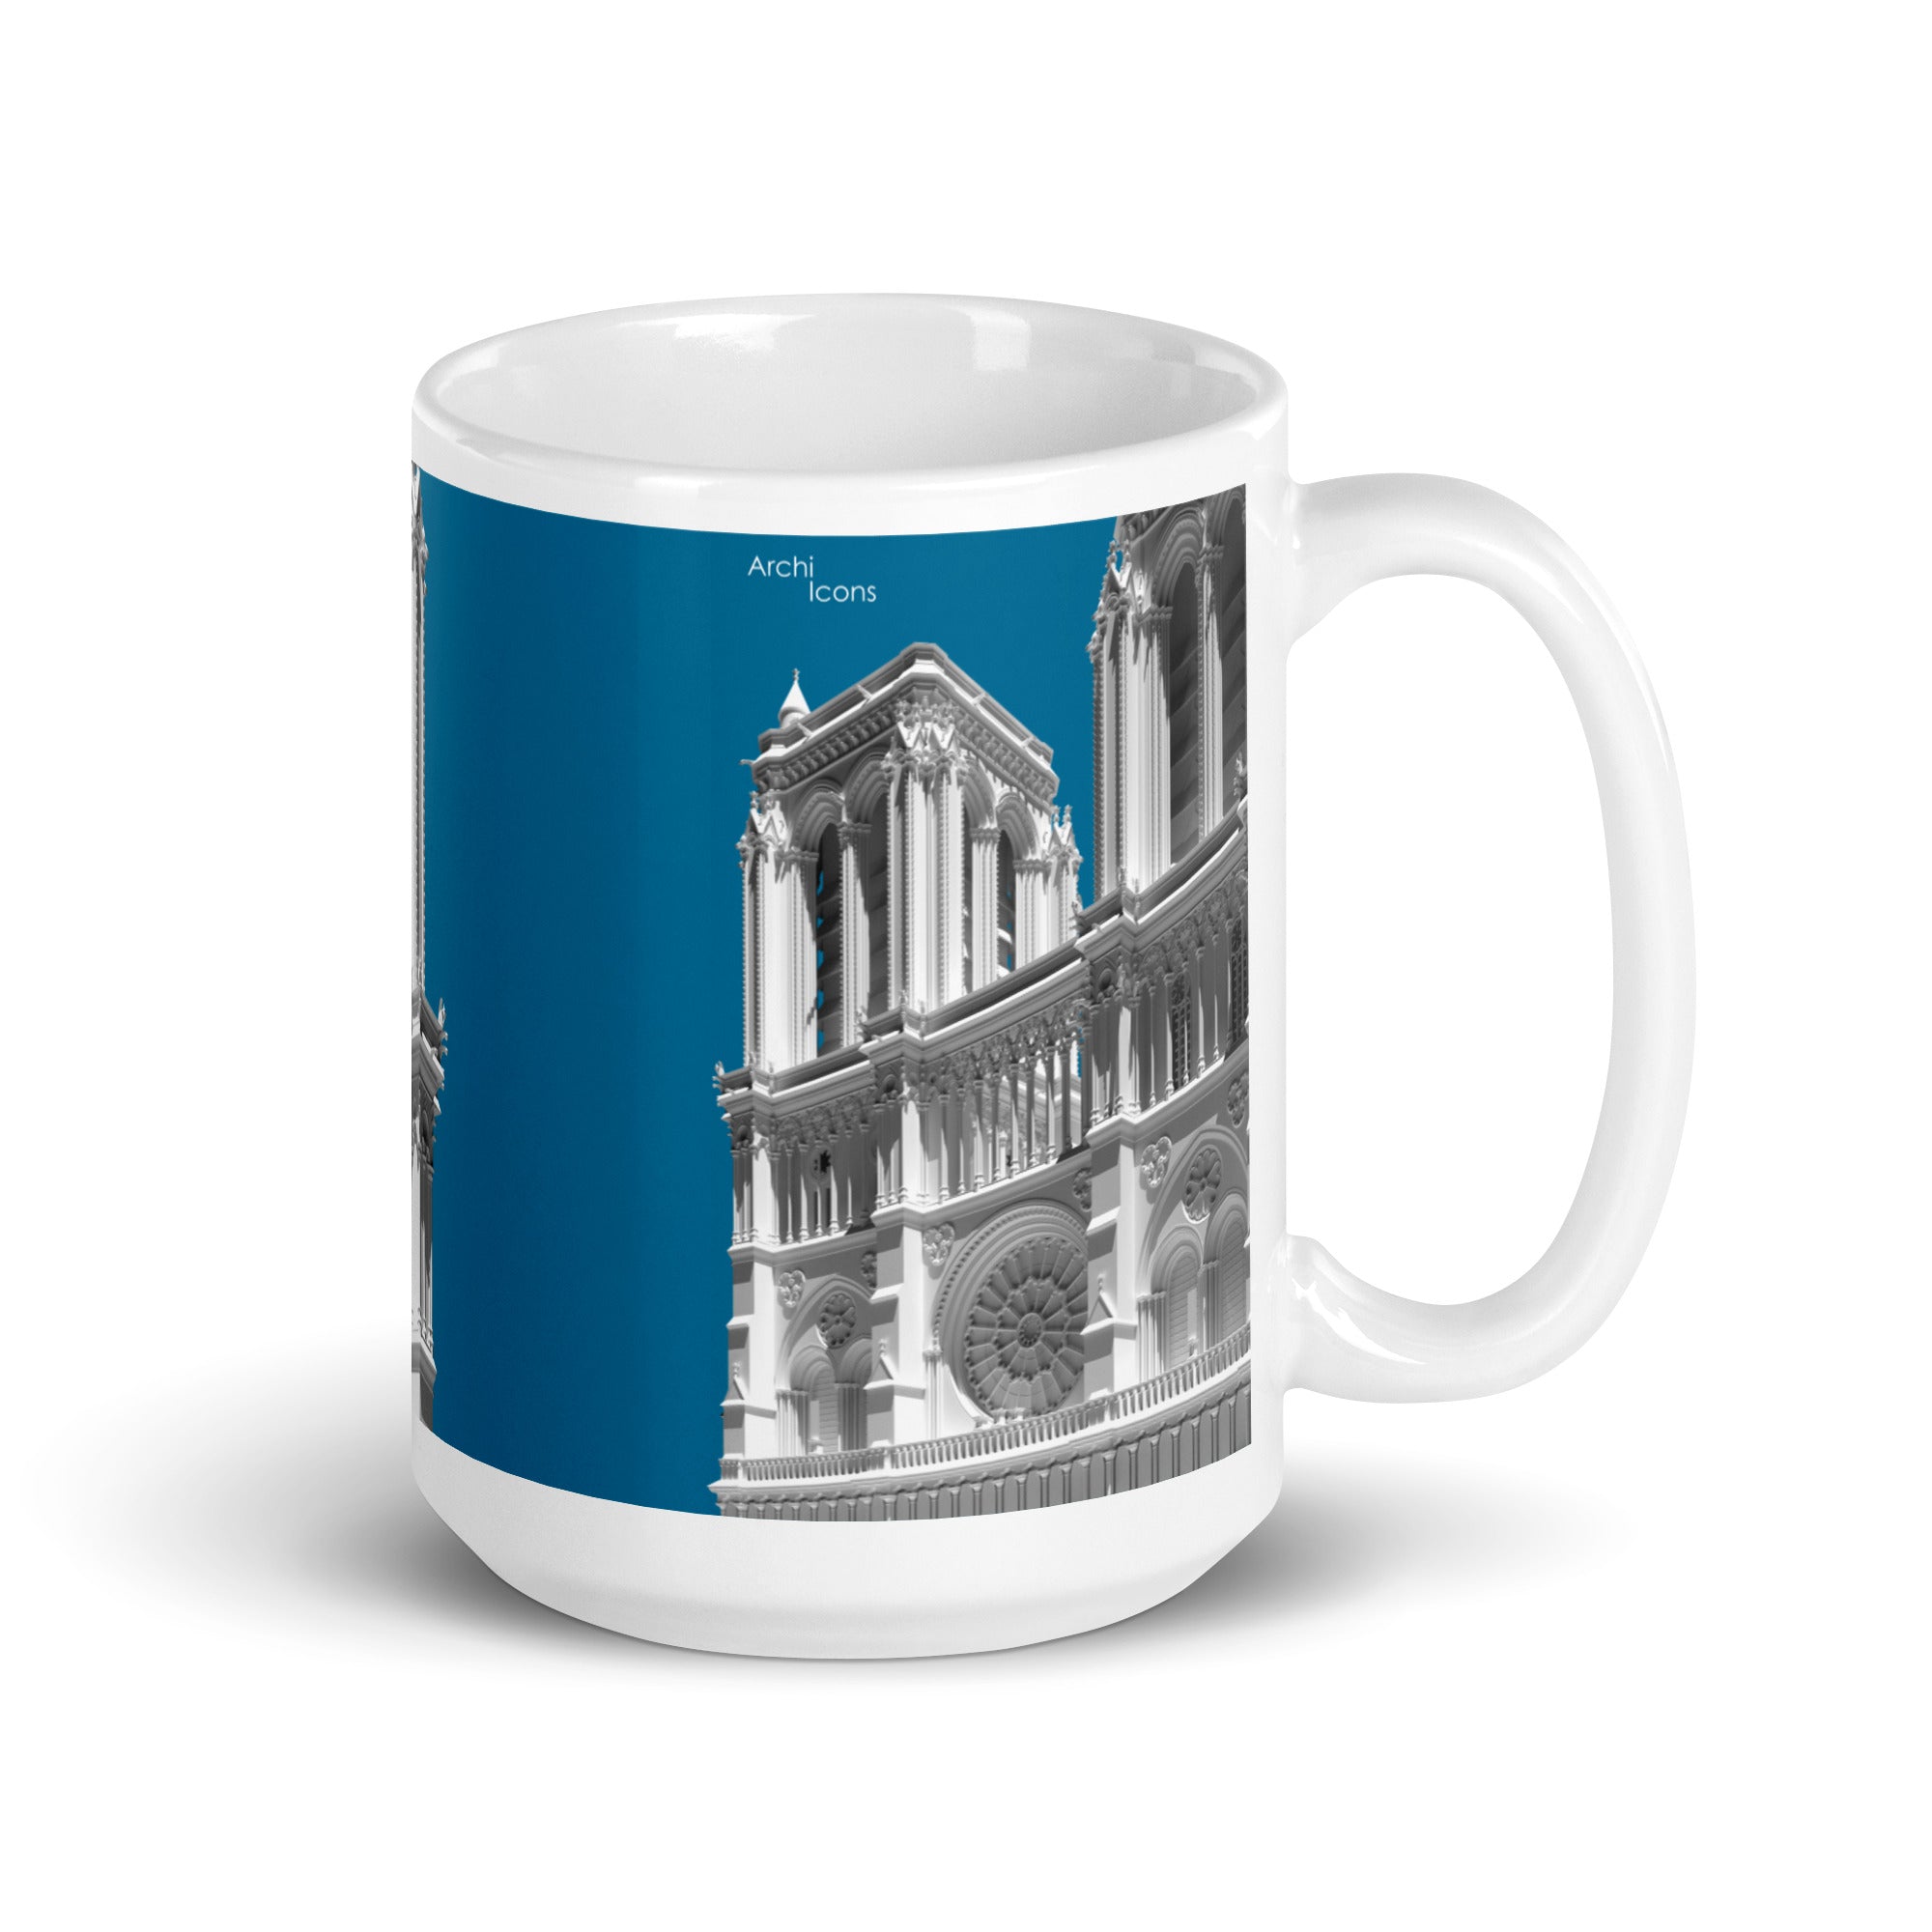 Notre-Dame de Paris Mugs